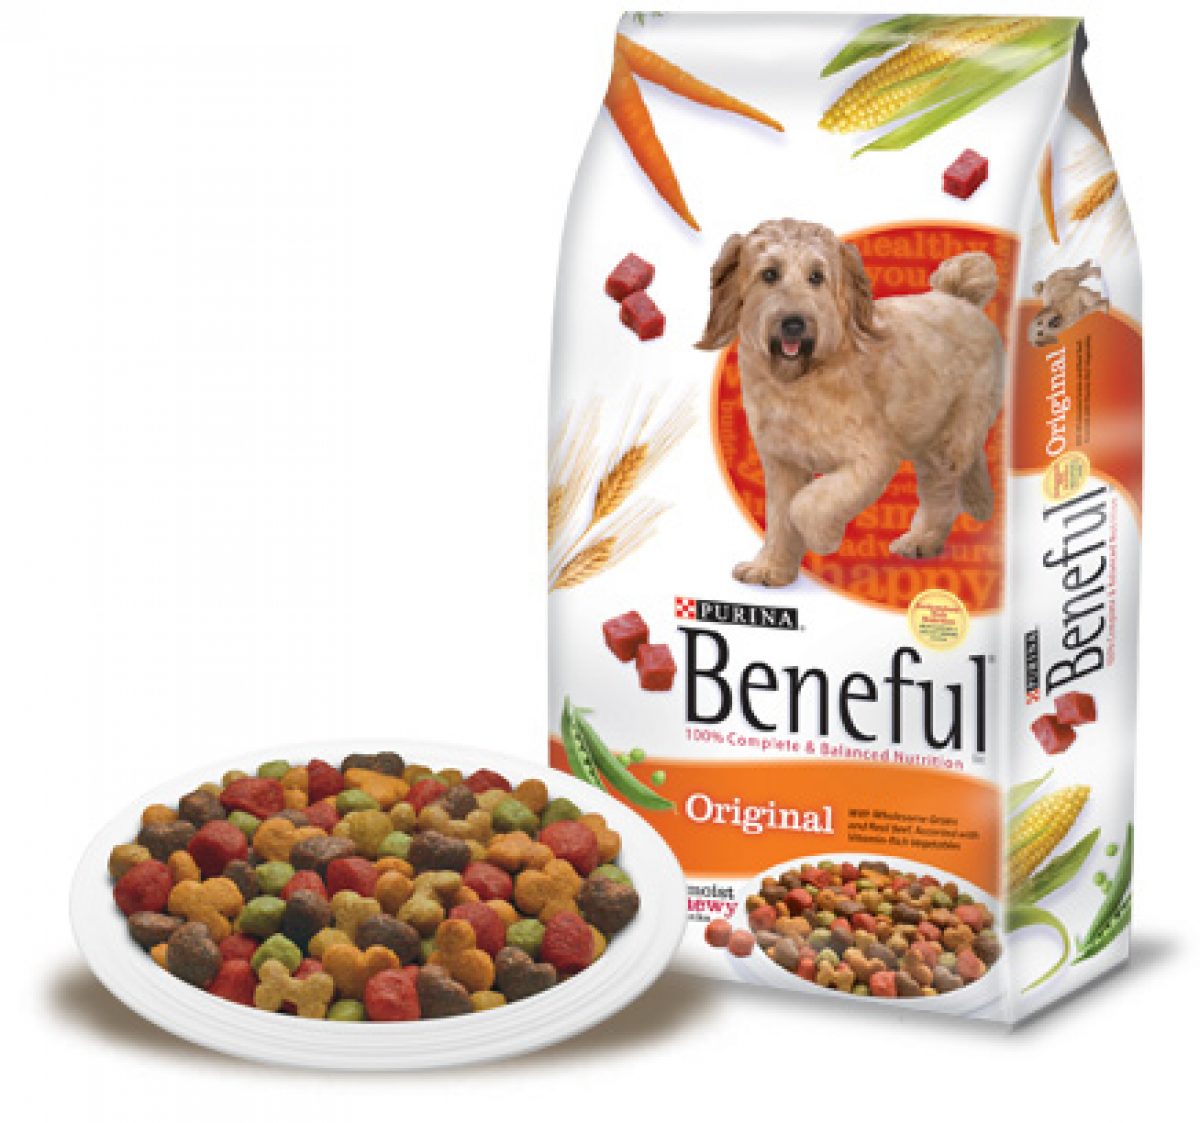 Beneful Dog Food Only $2.49 at Rite Aid!  Mojosavings.com